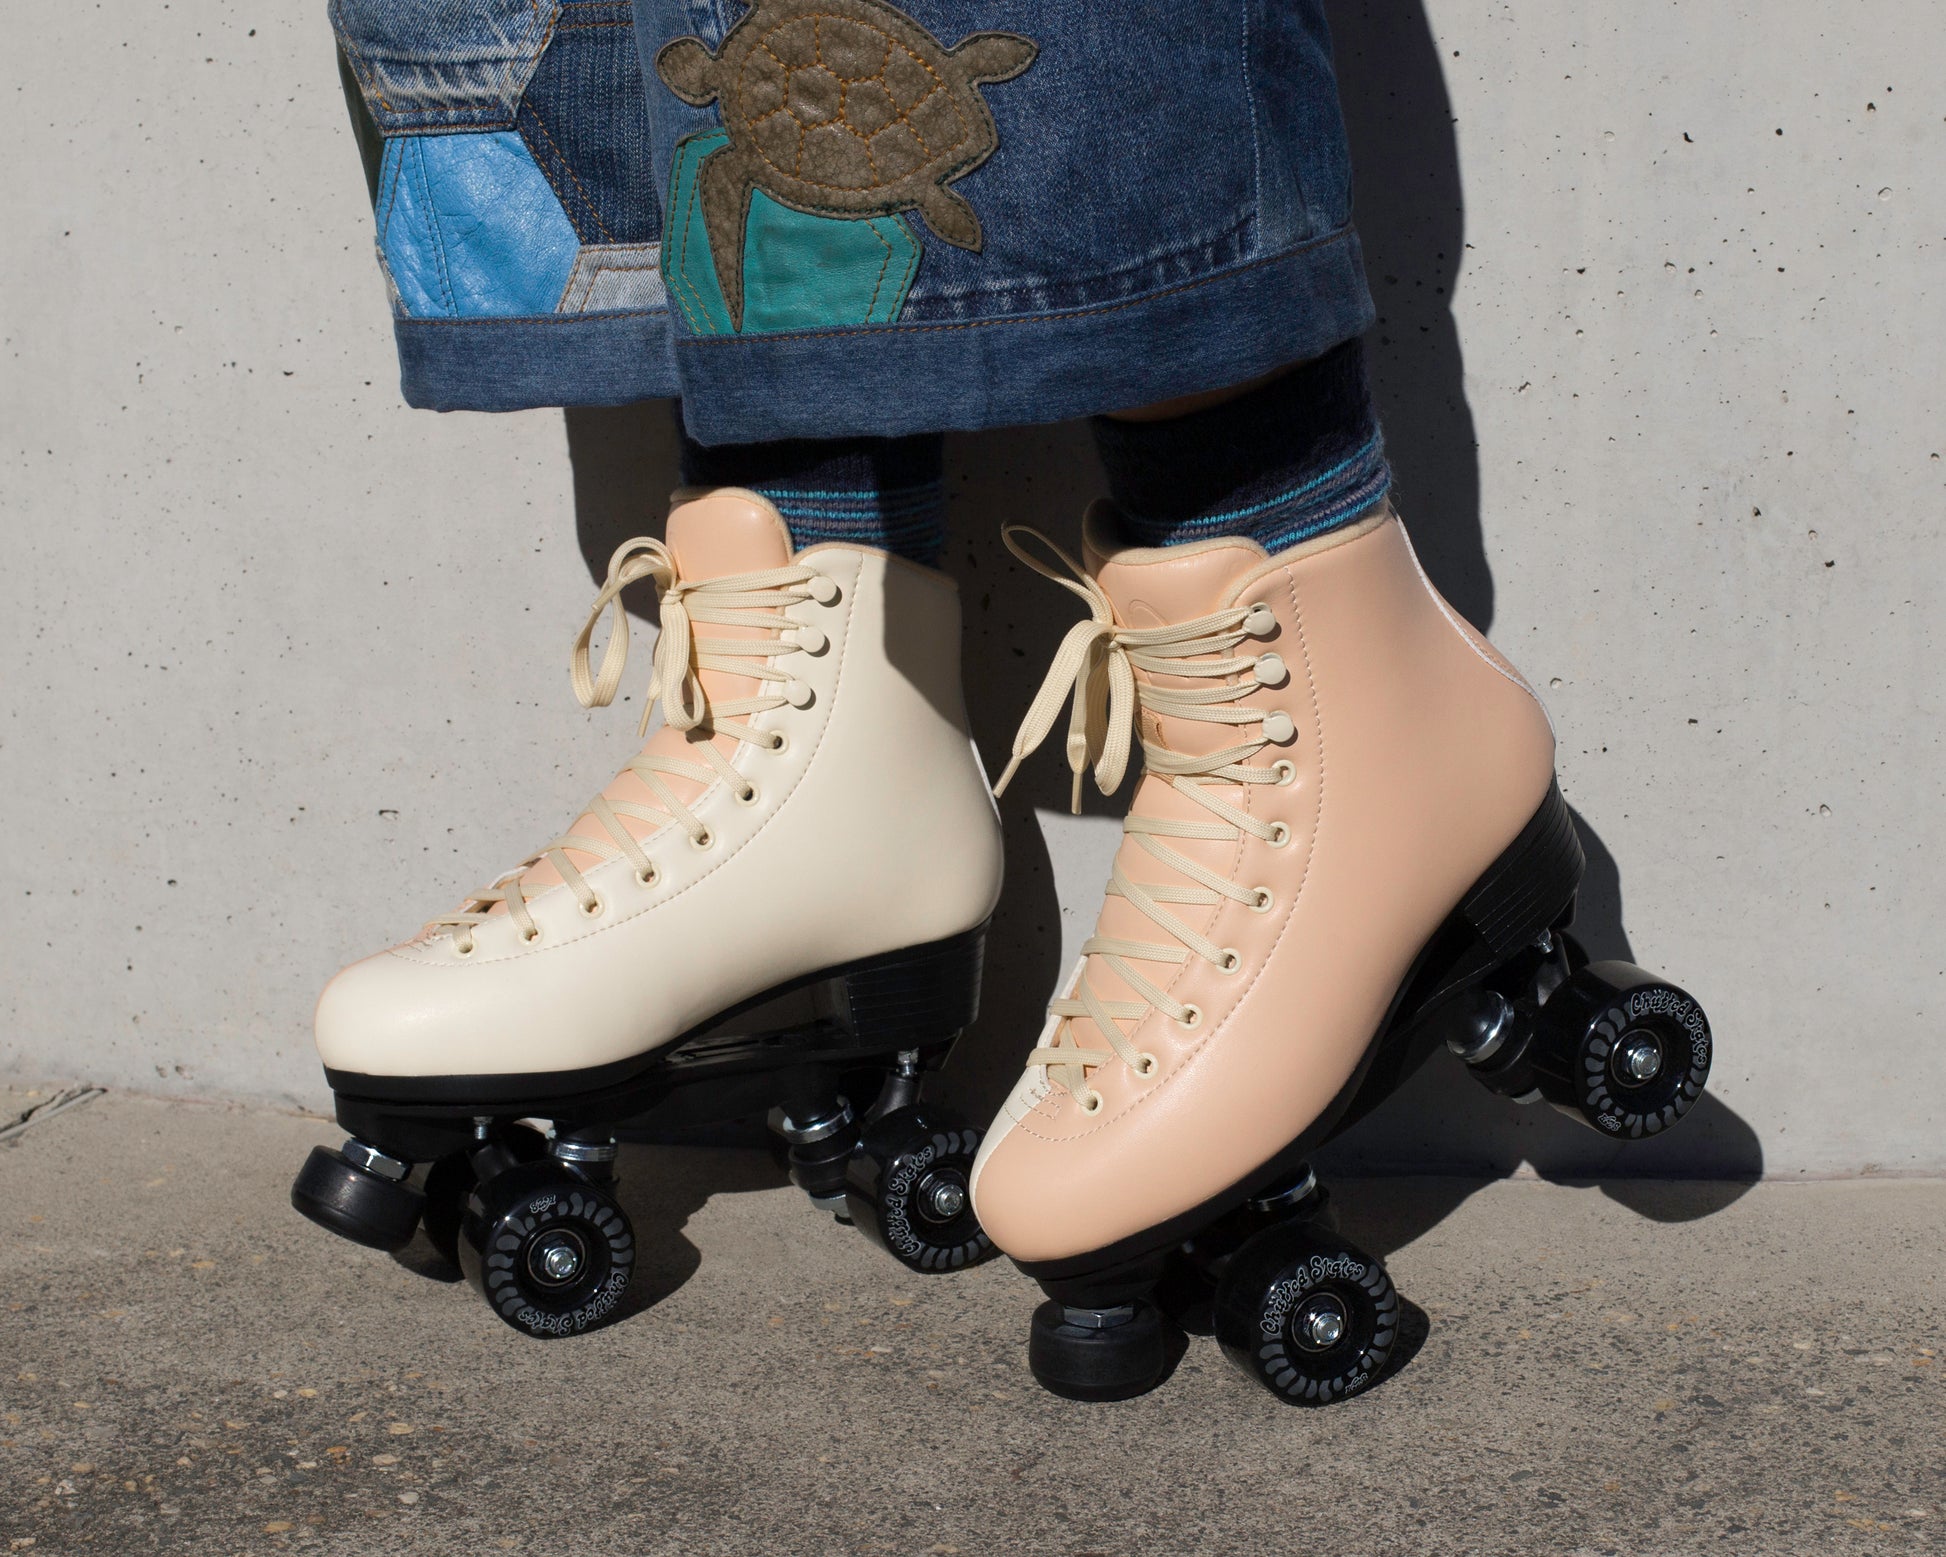 Chuffed Skates cruiser beginner roller skate - sunrise colour (peach & tan)